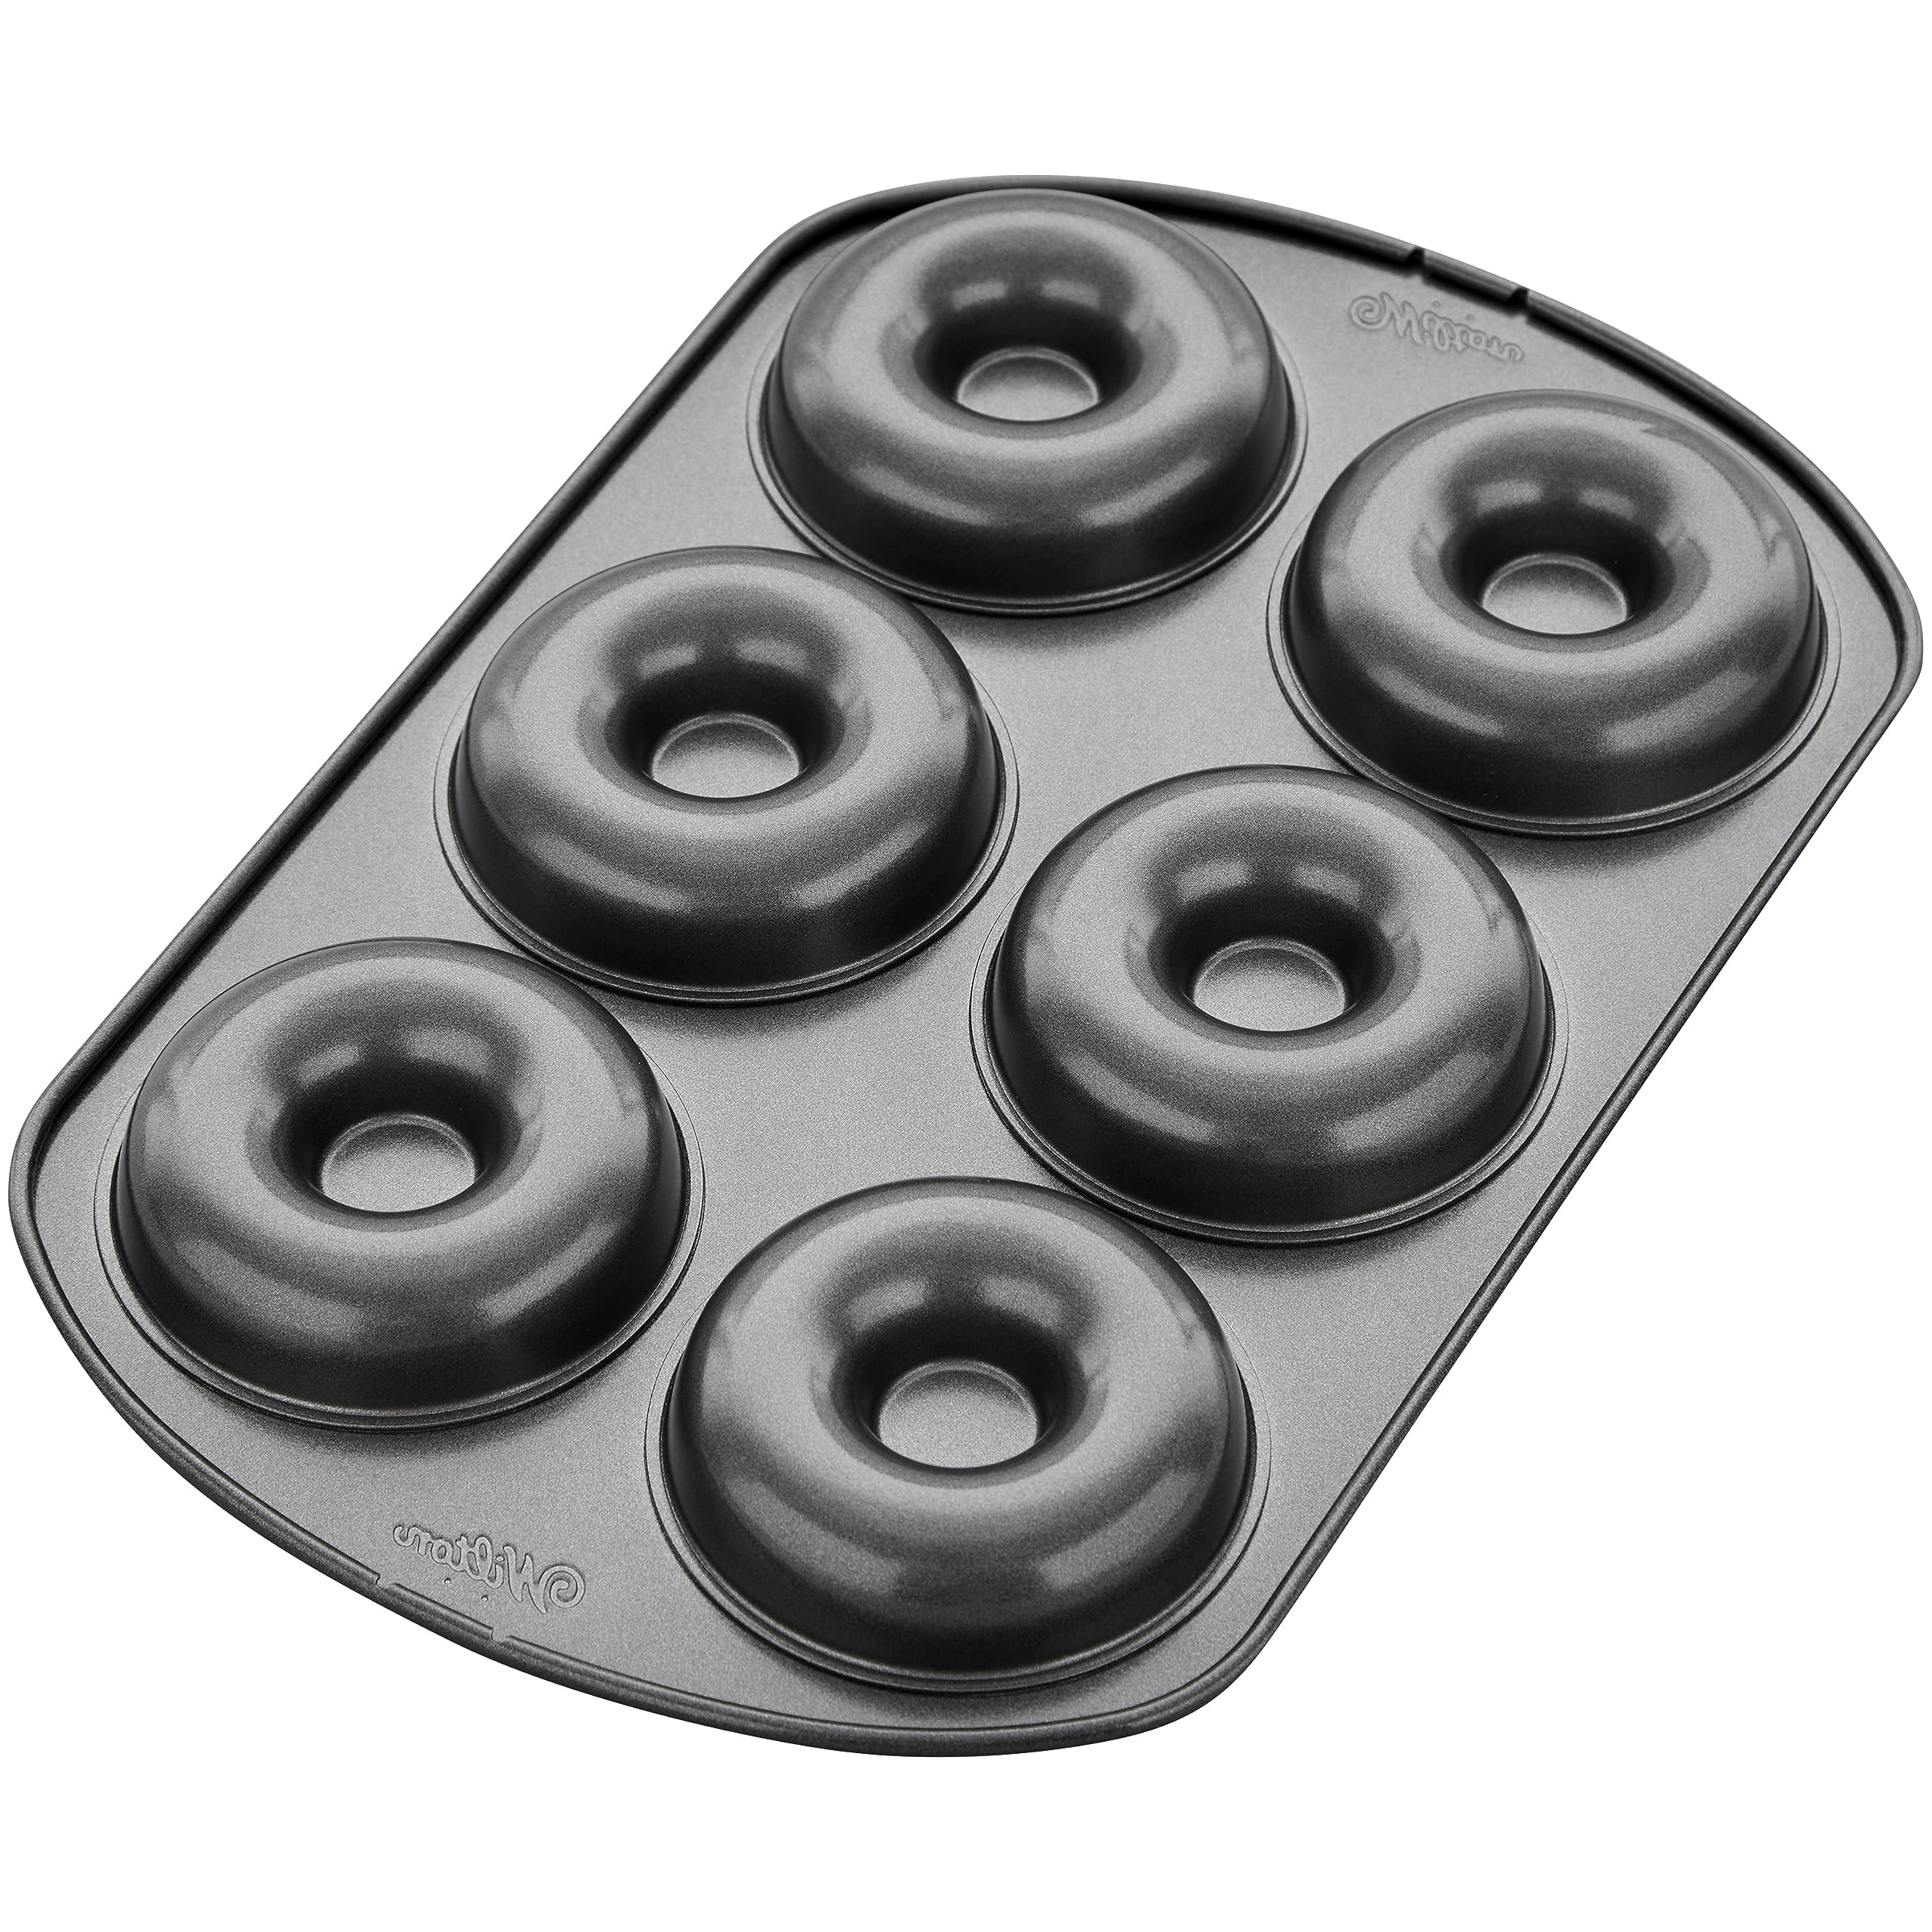 Wilton 6-Cavity Doughnut Baking Pan, Makes Individual Full-Sized 3 3/4